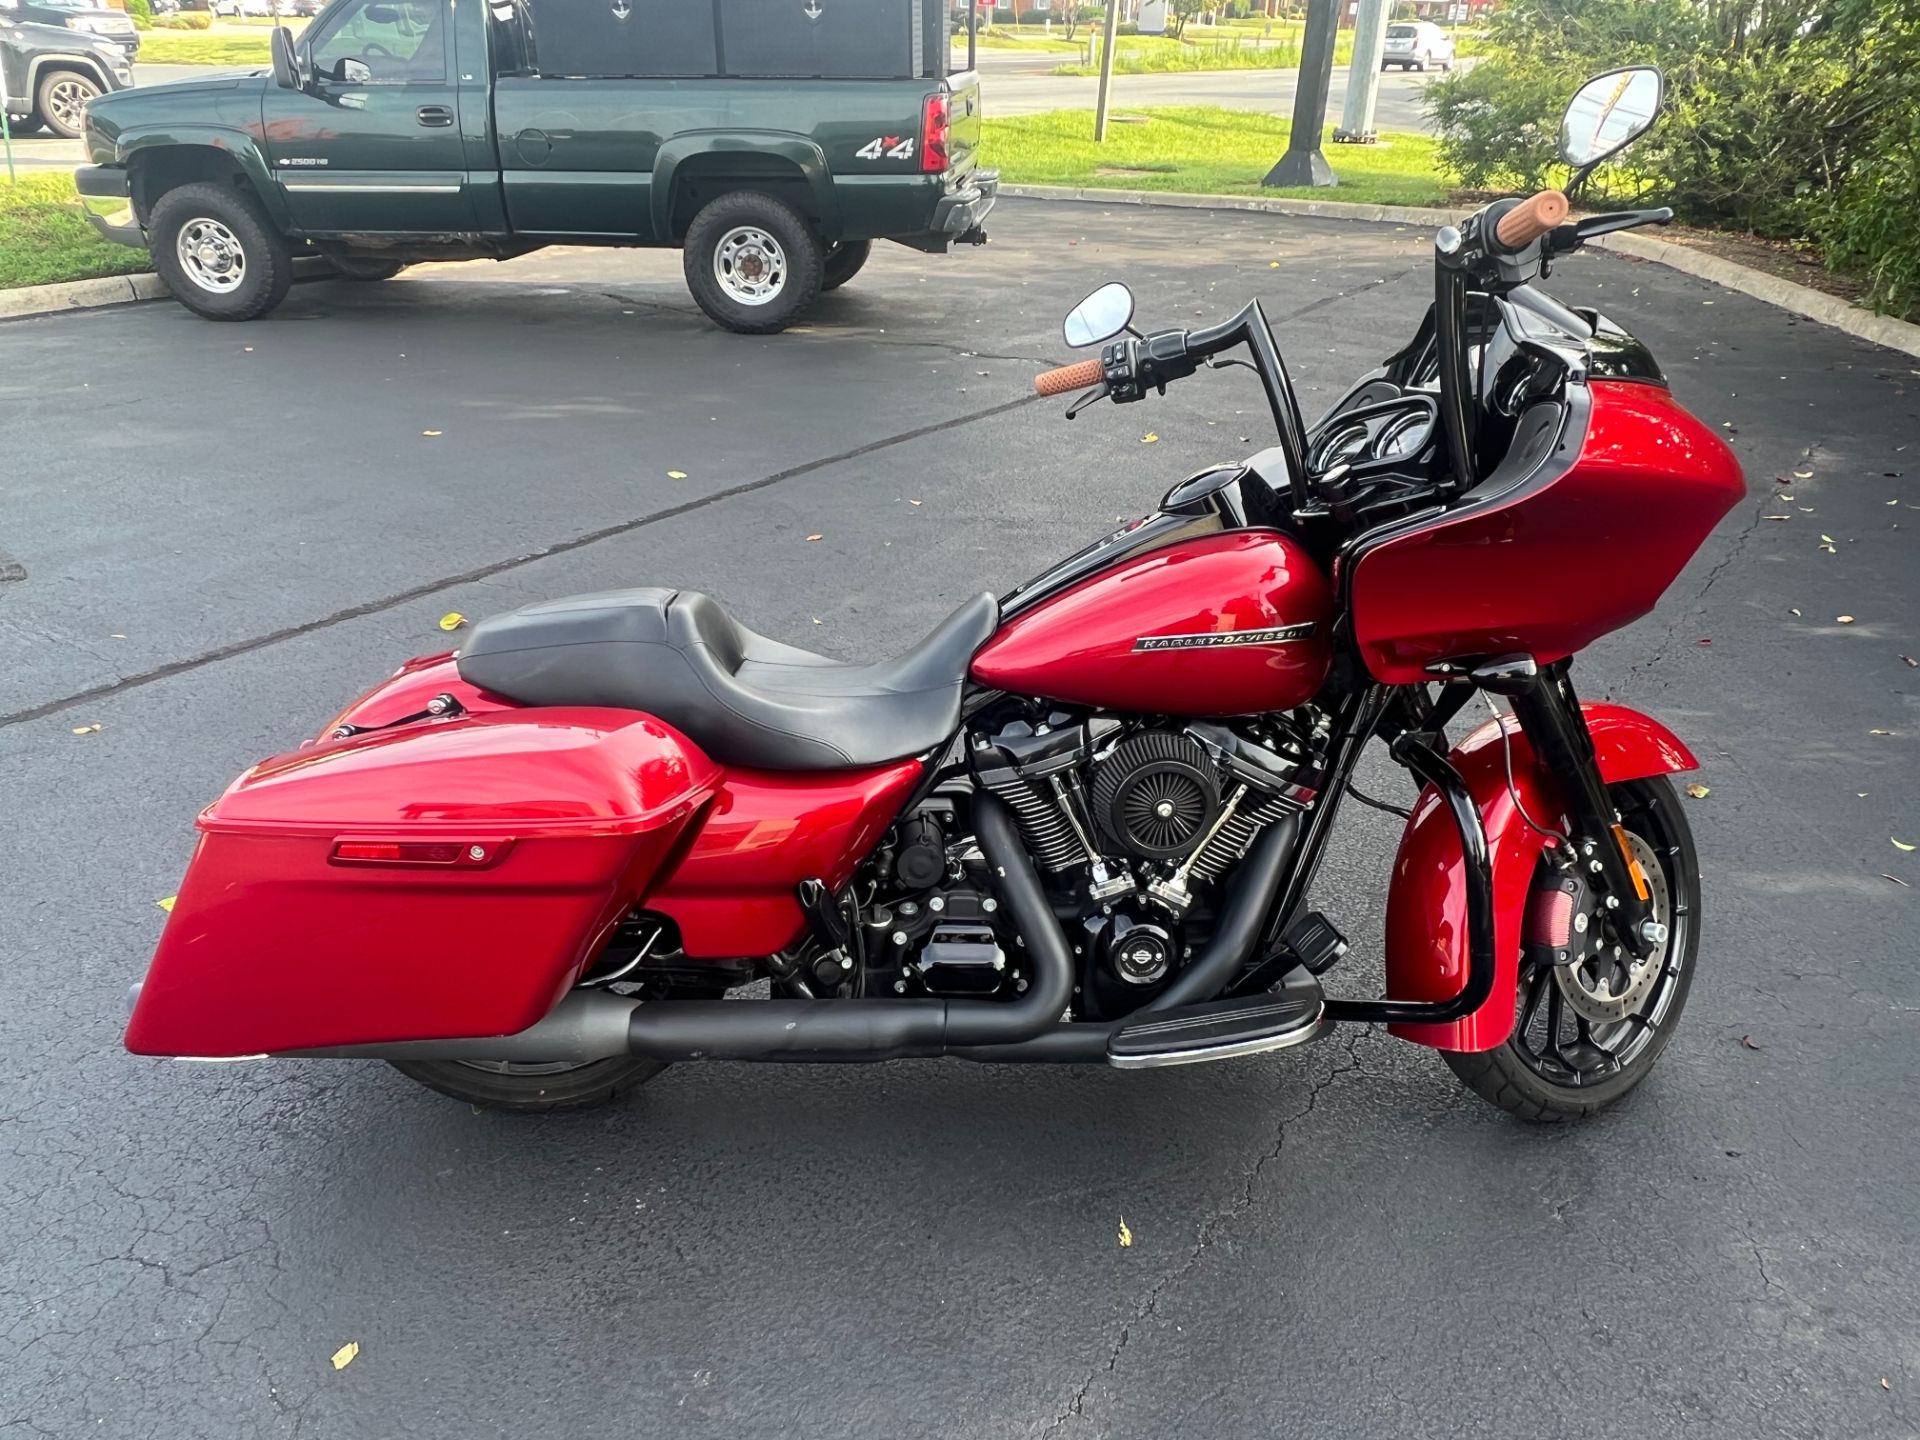 2018 Harley-Davidson Road Glide® Special in Lynchburg, Virginia - Photo 8